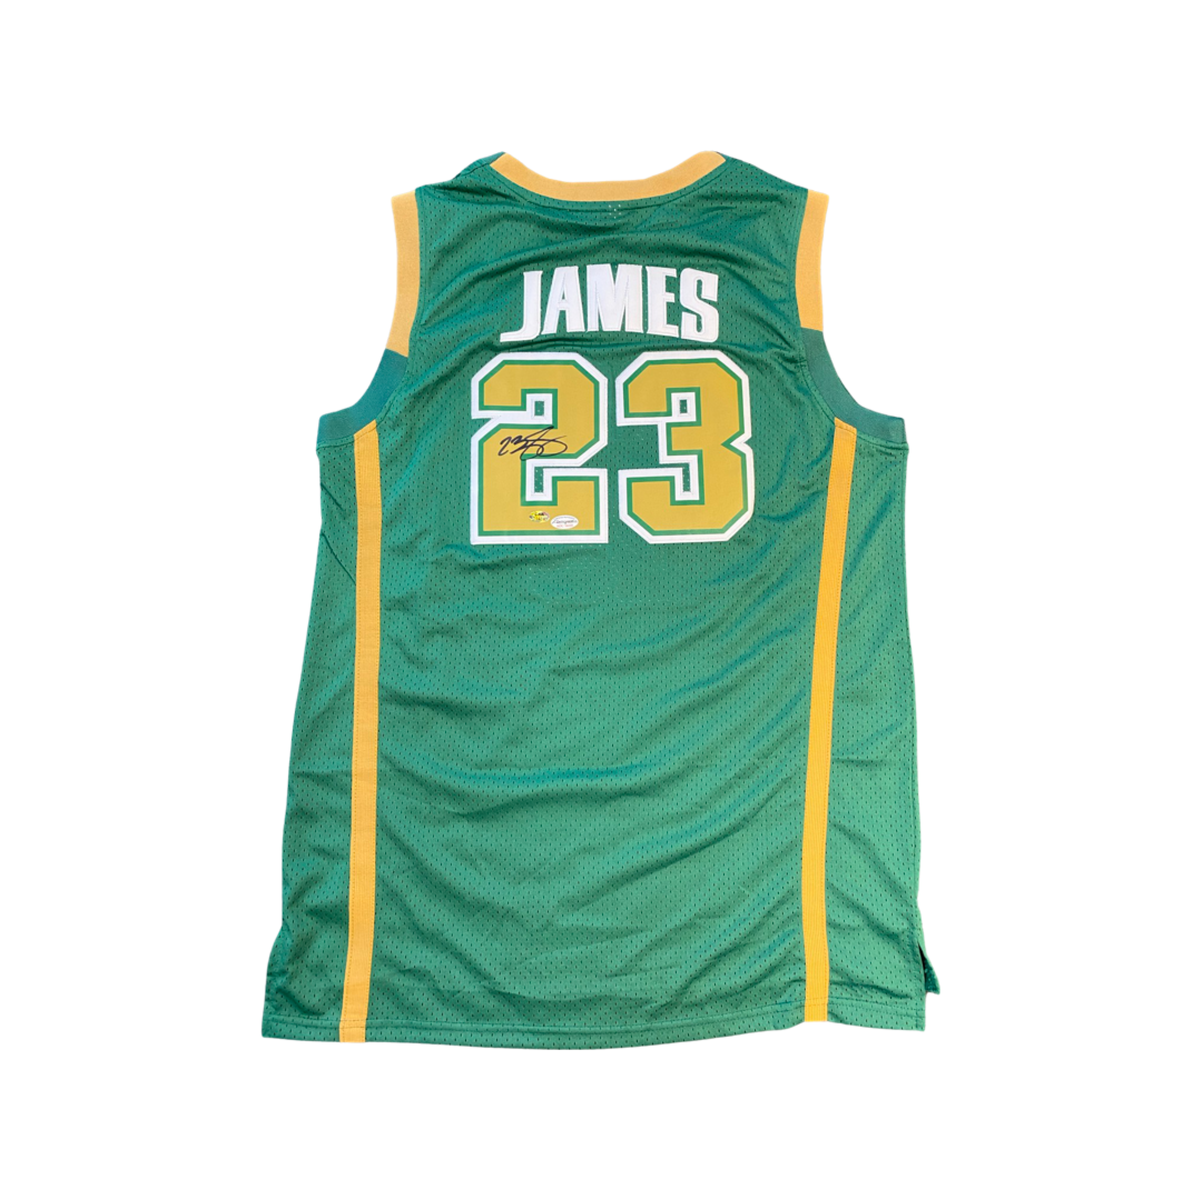 LeBron James Irish High School Jersey for Sale - Jersey One